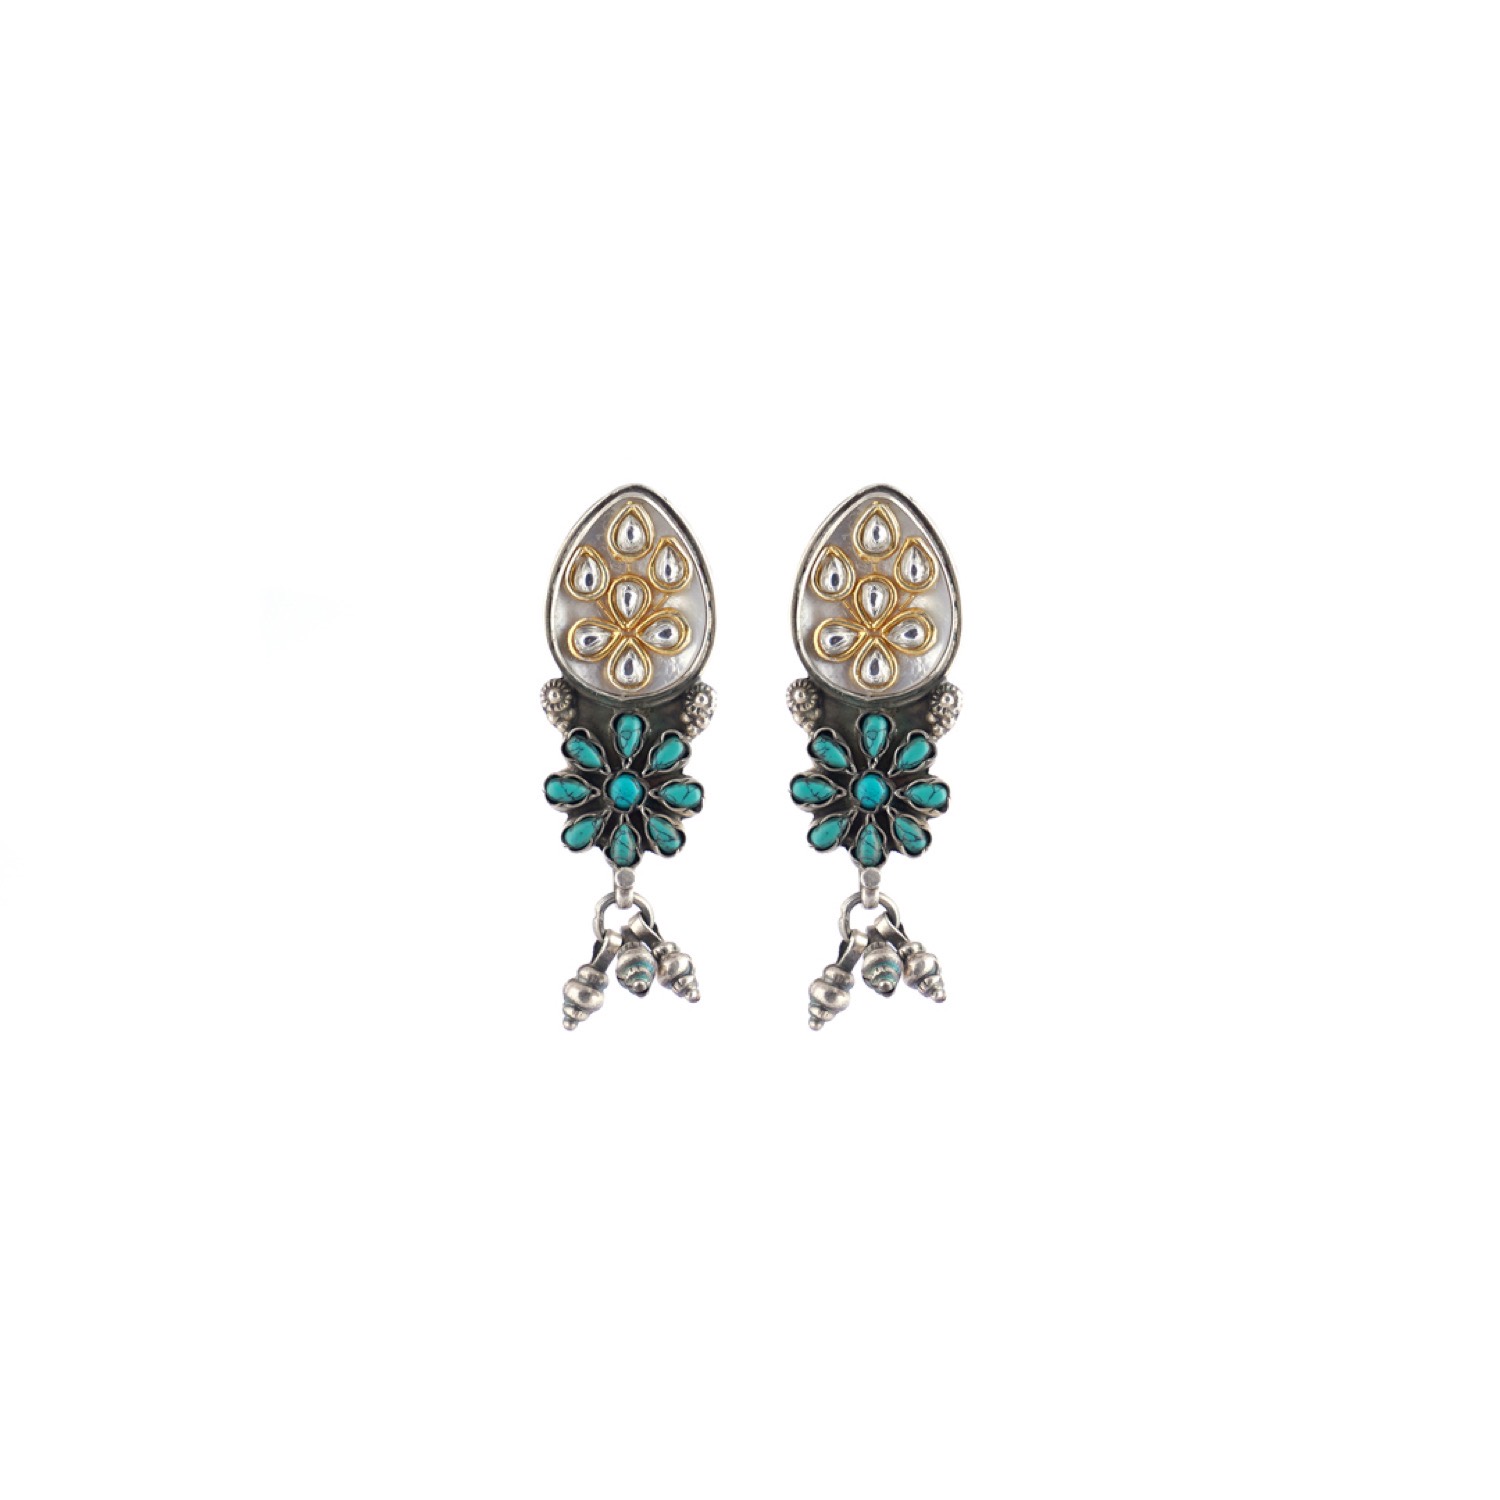 varam_earrings_102022_tarquoise_blue_and_white_stone_studded_silver_earrings-1